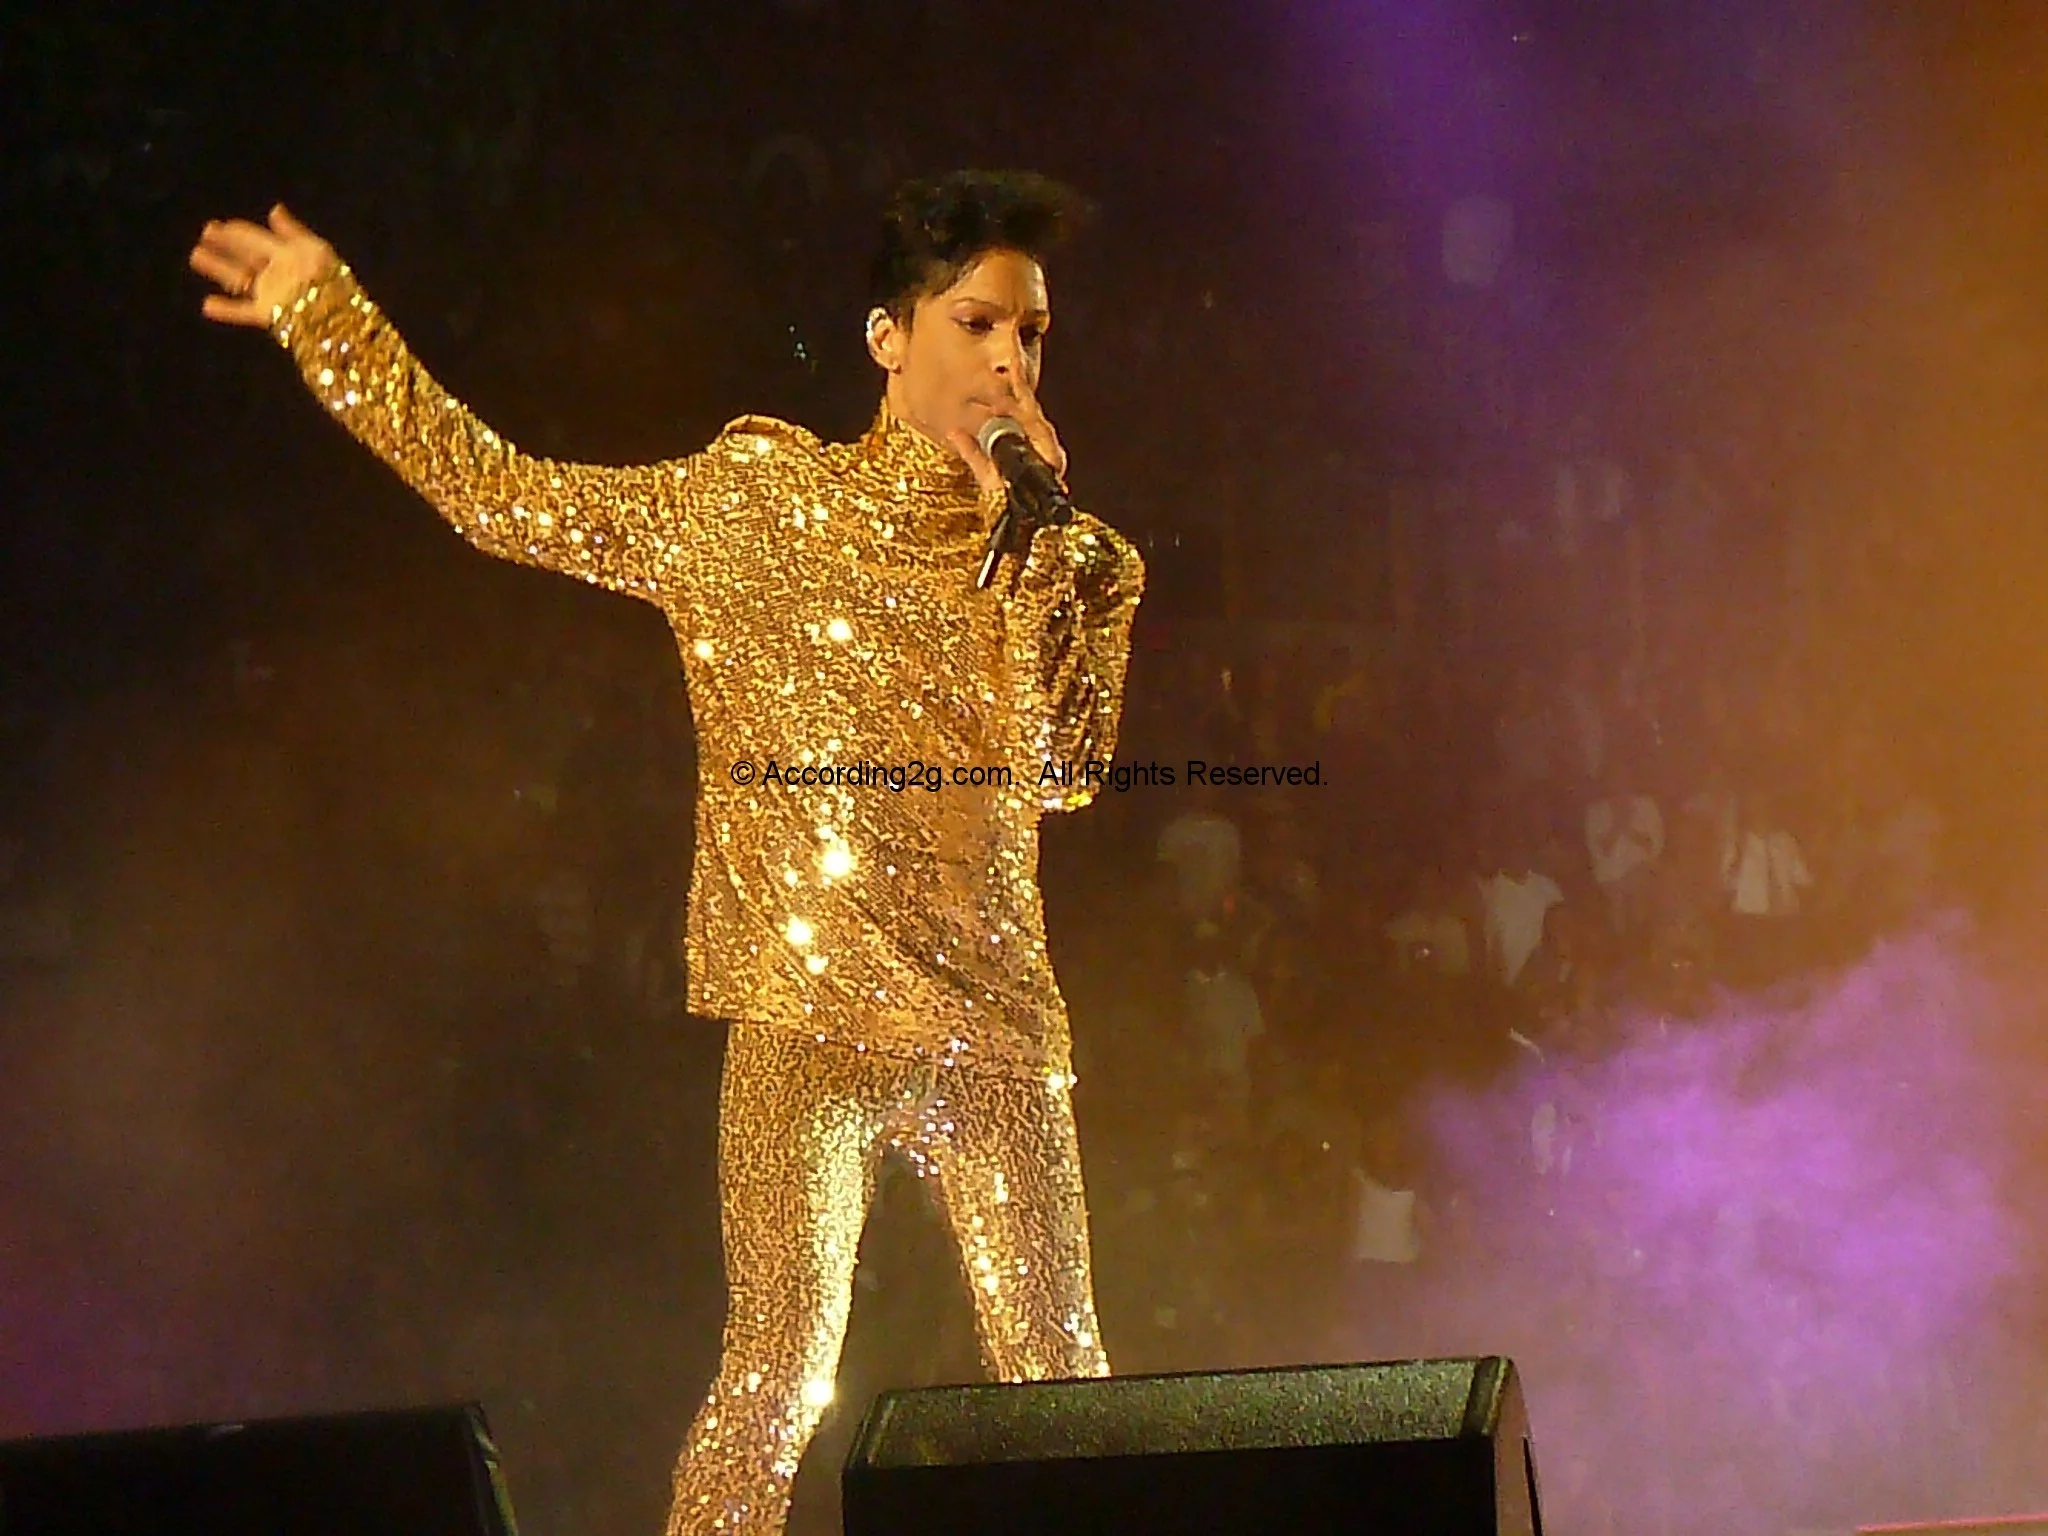 Prince – Forum May 27, 2011